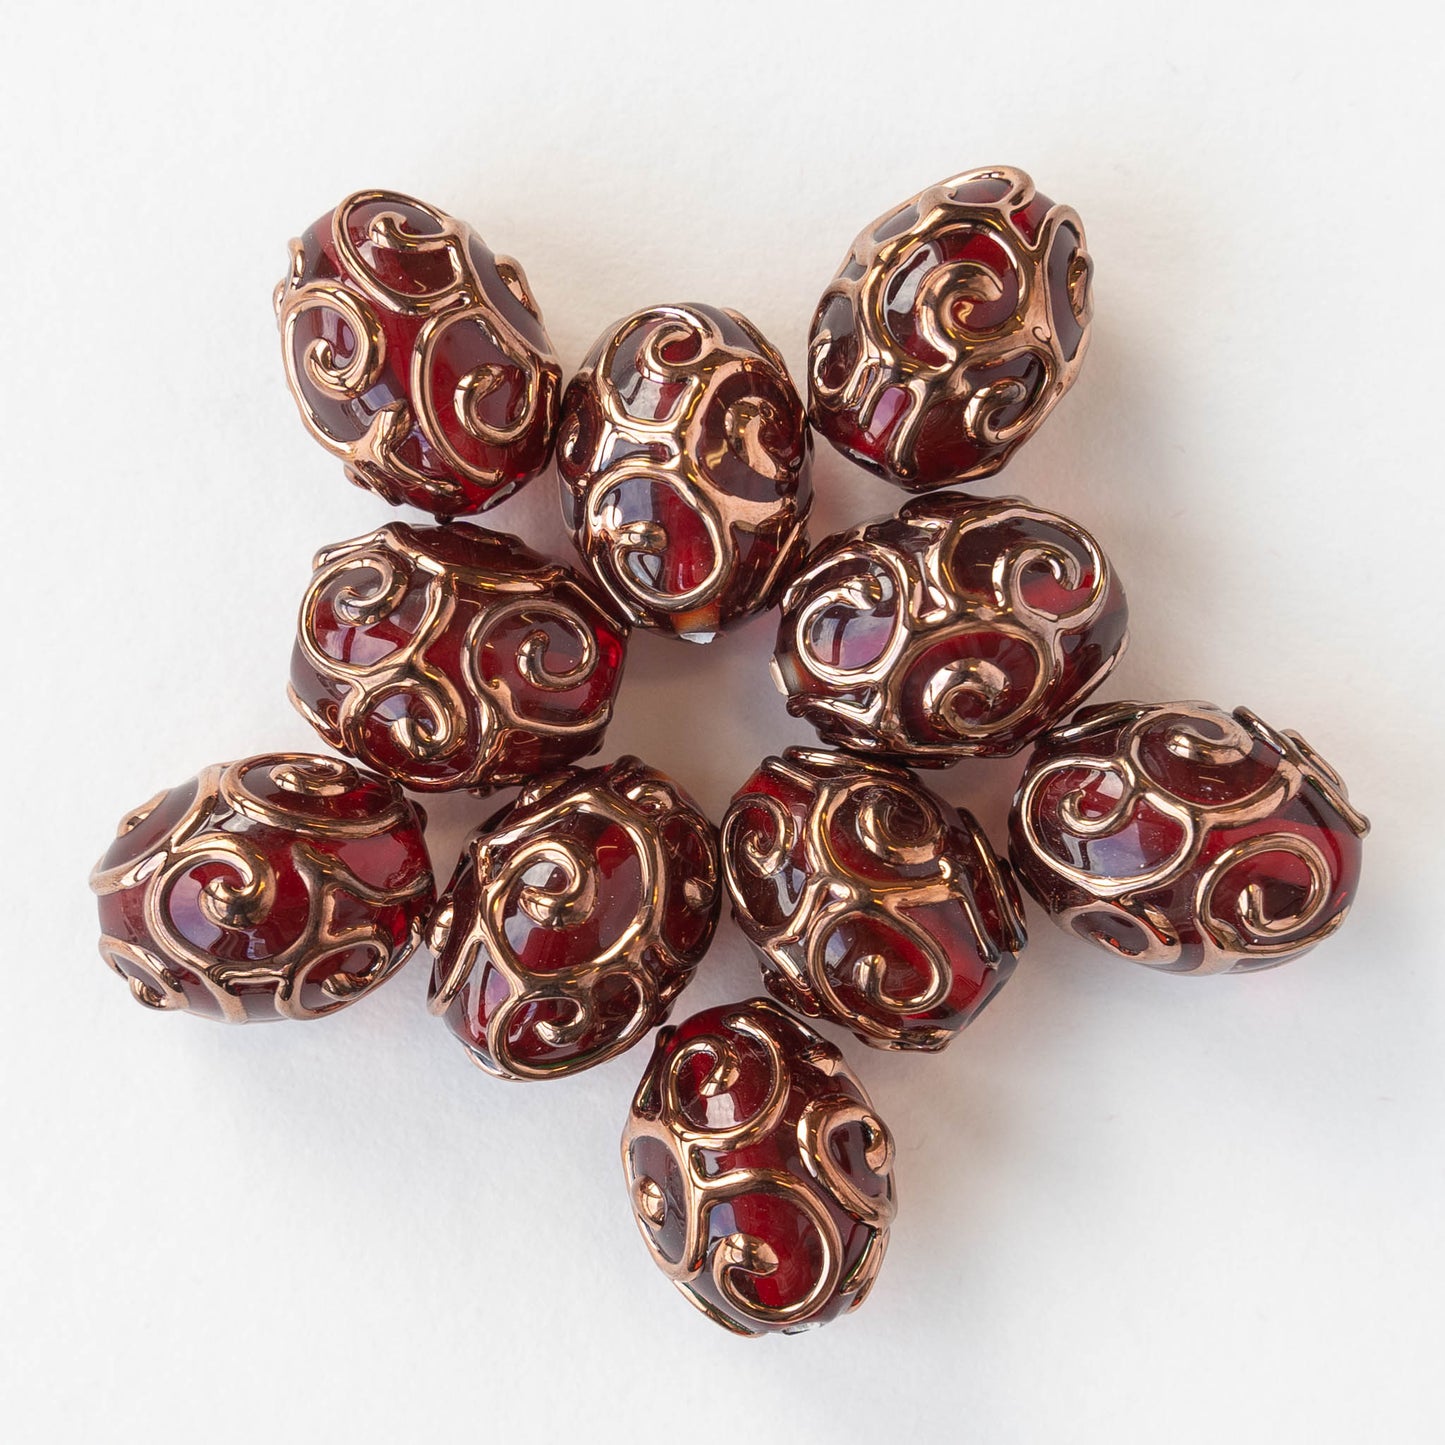 17x14mm Handmade Lampwork Beads - Red - 2, 4 or 8